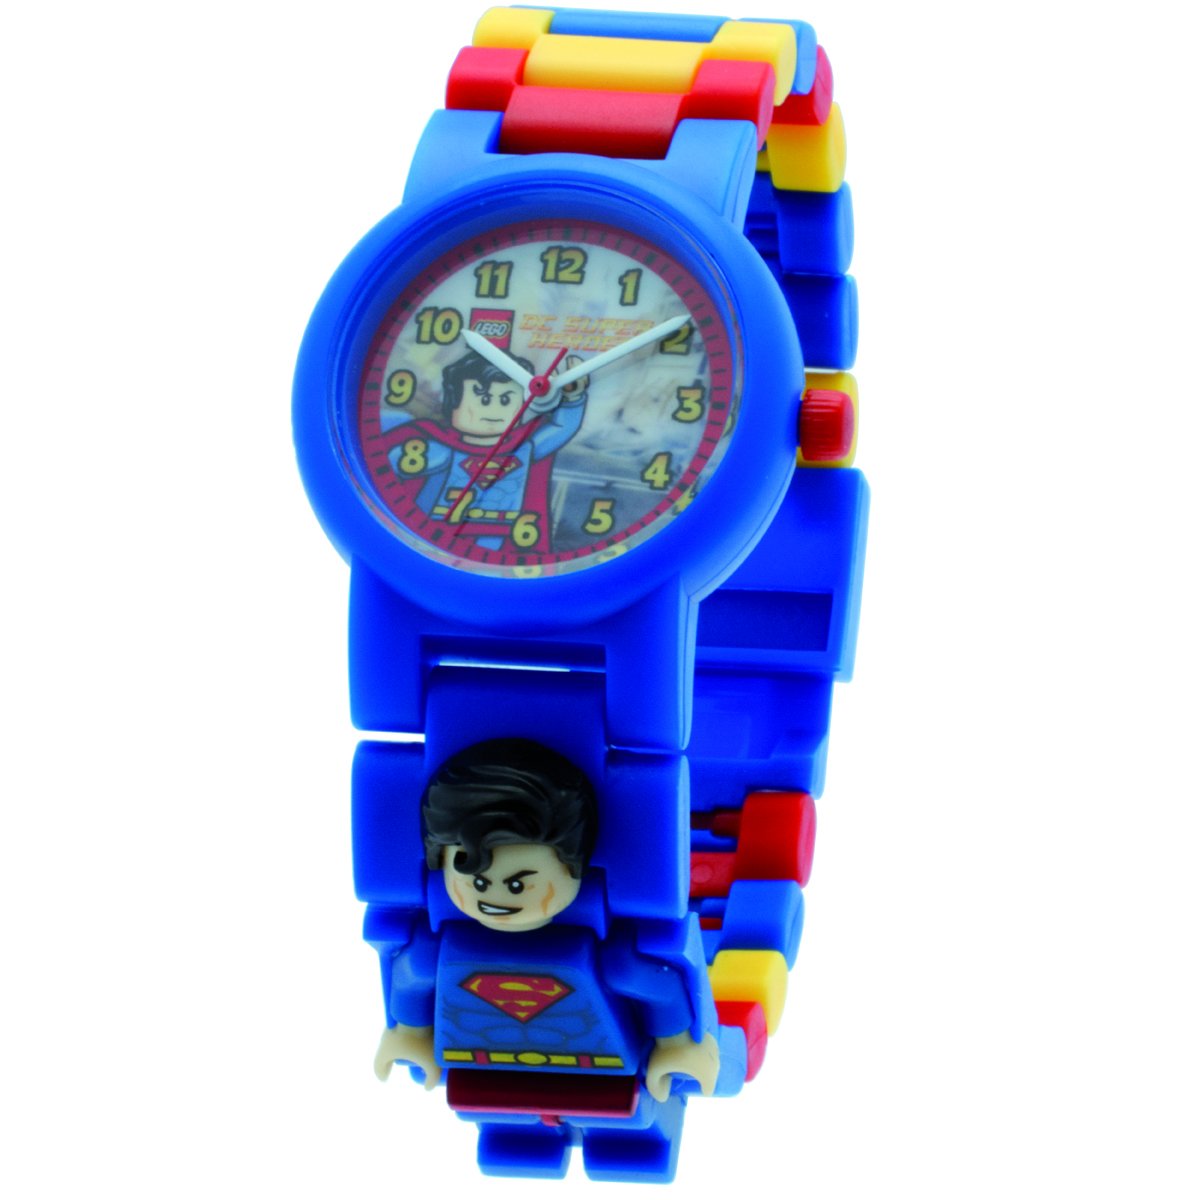 Reloj Infantil Lego 8020257